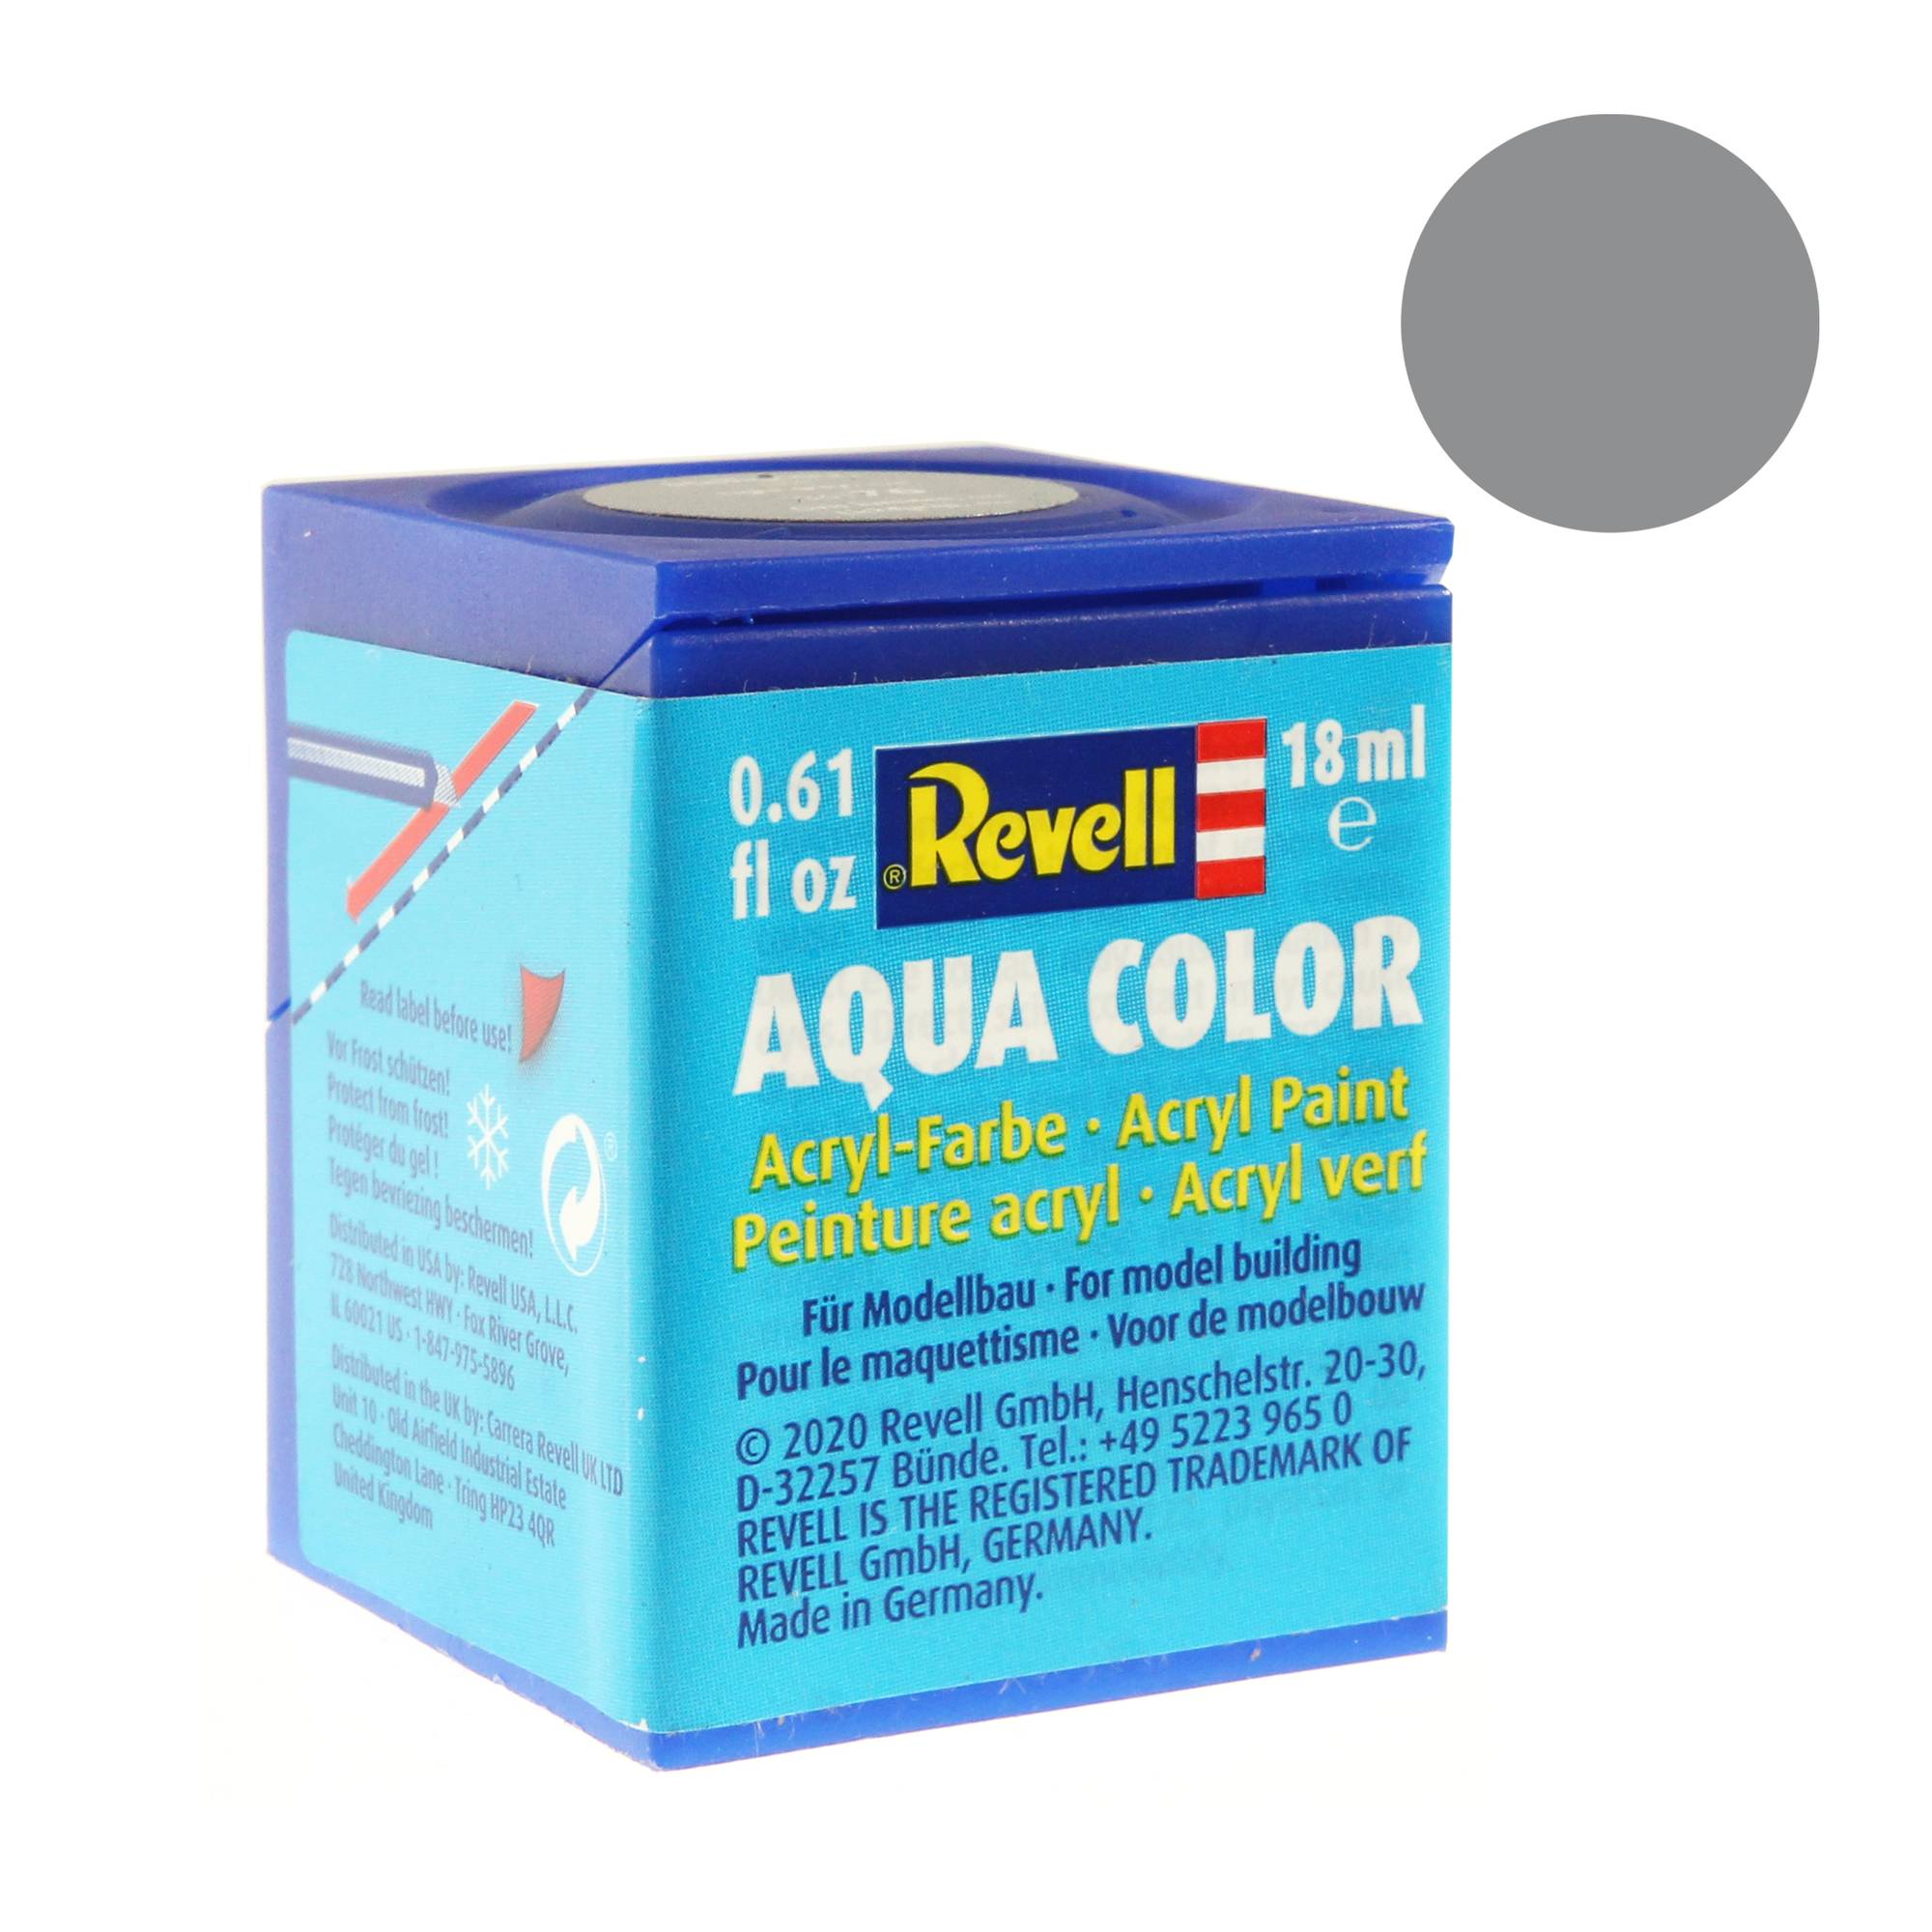 Revell Light Grey Matt Usaf Aqua Colour Acrylic Paint 18ml 176